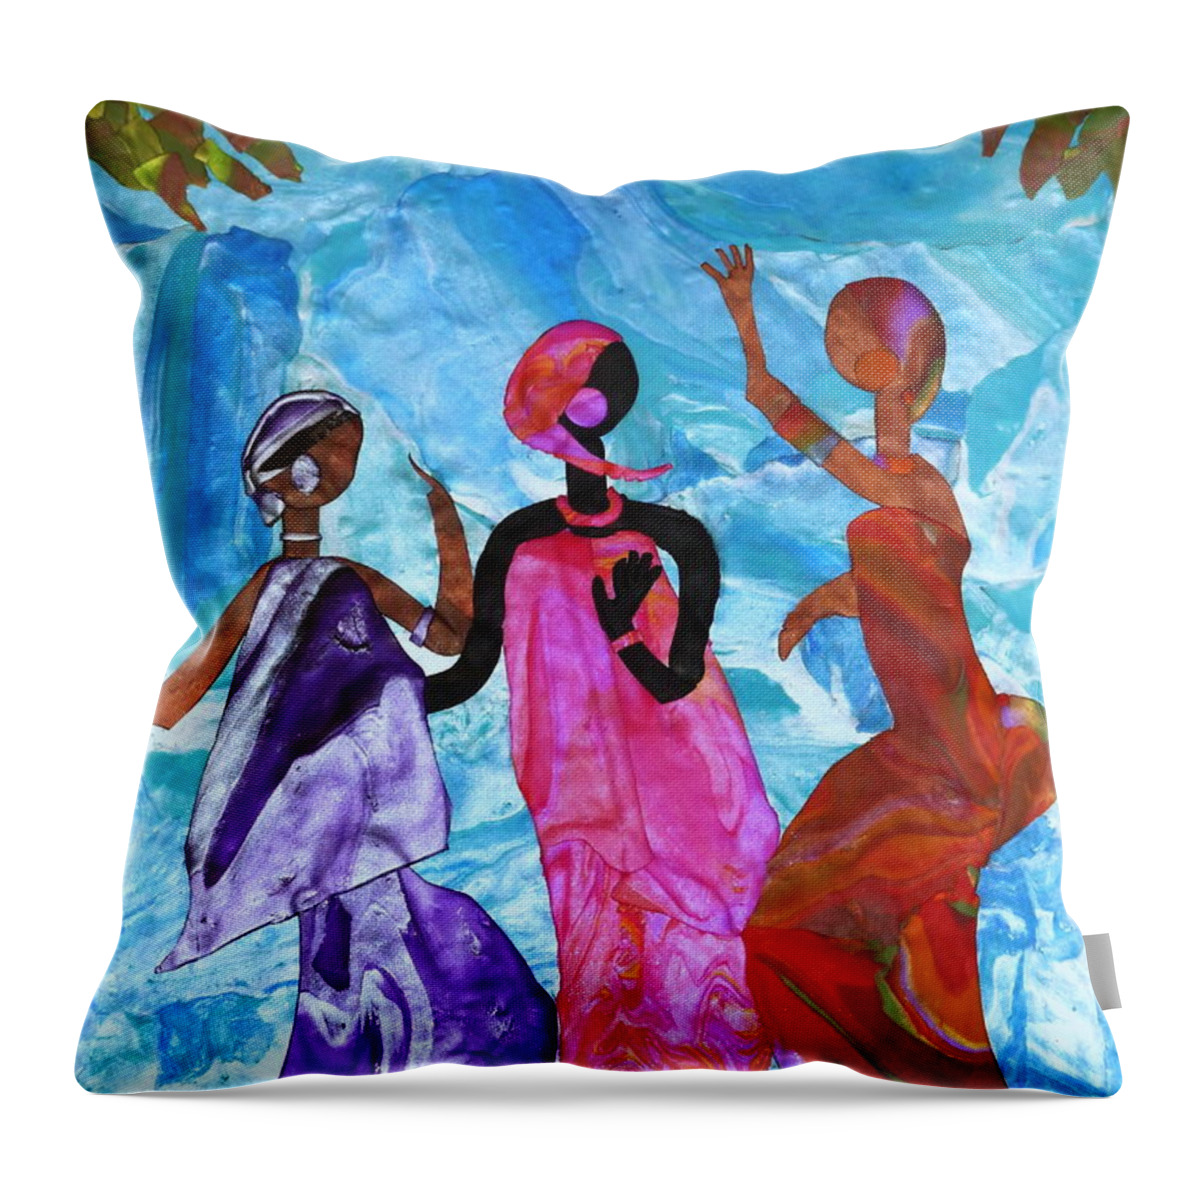 Women Throw Pillow featuring the mixed media Joyful Celebration by Deborah Stanley